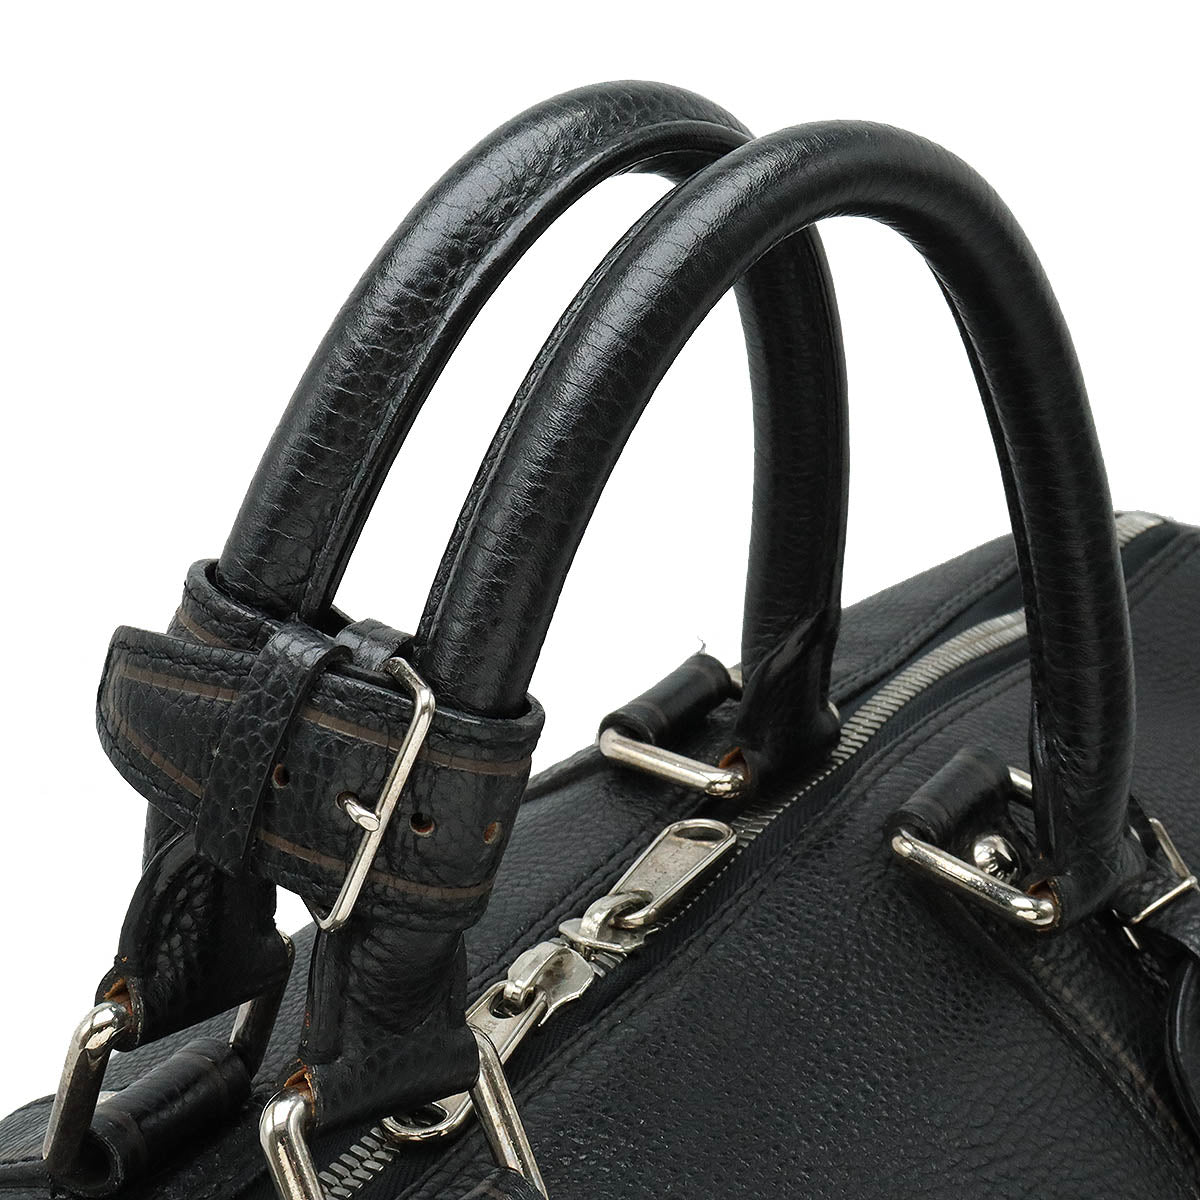 Louis Vuitton Louis Vuitton Tobacco Kypopur 50 Boston Bag Travel Bag Black M95251